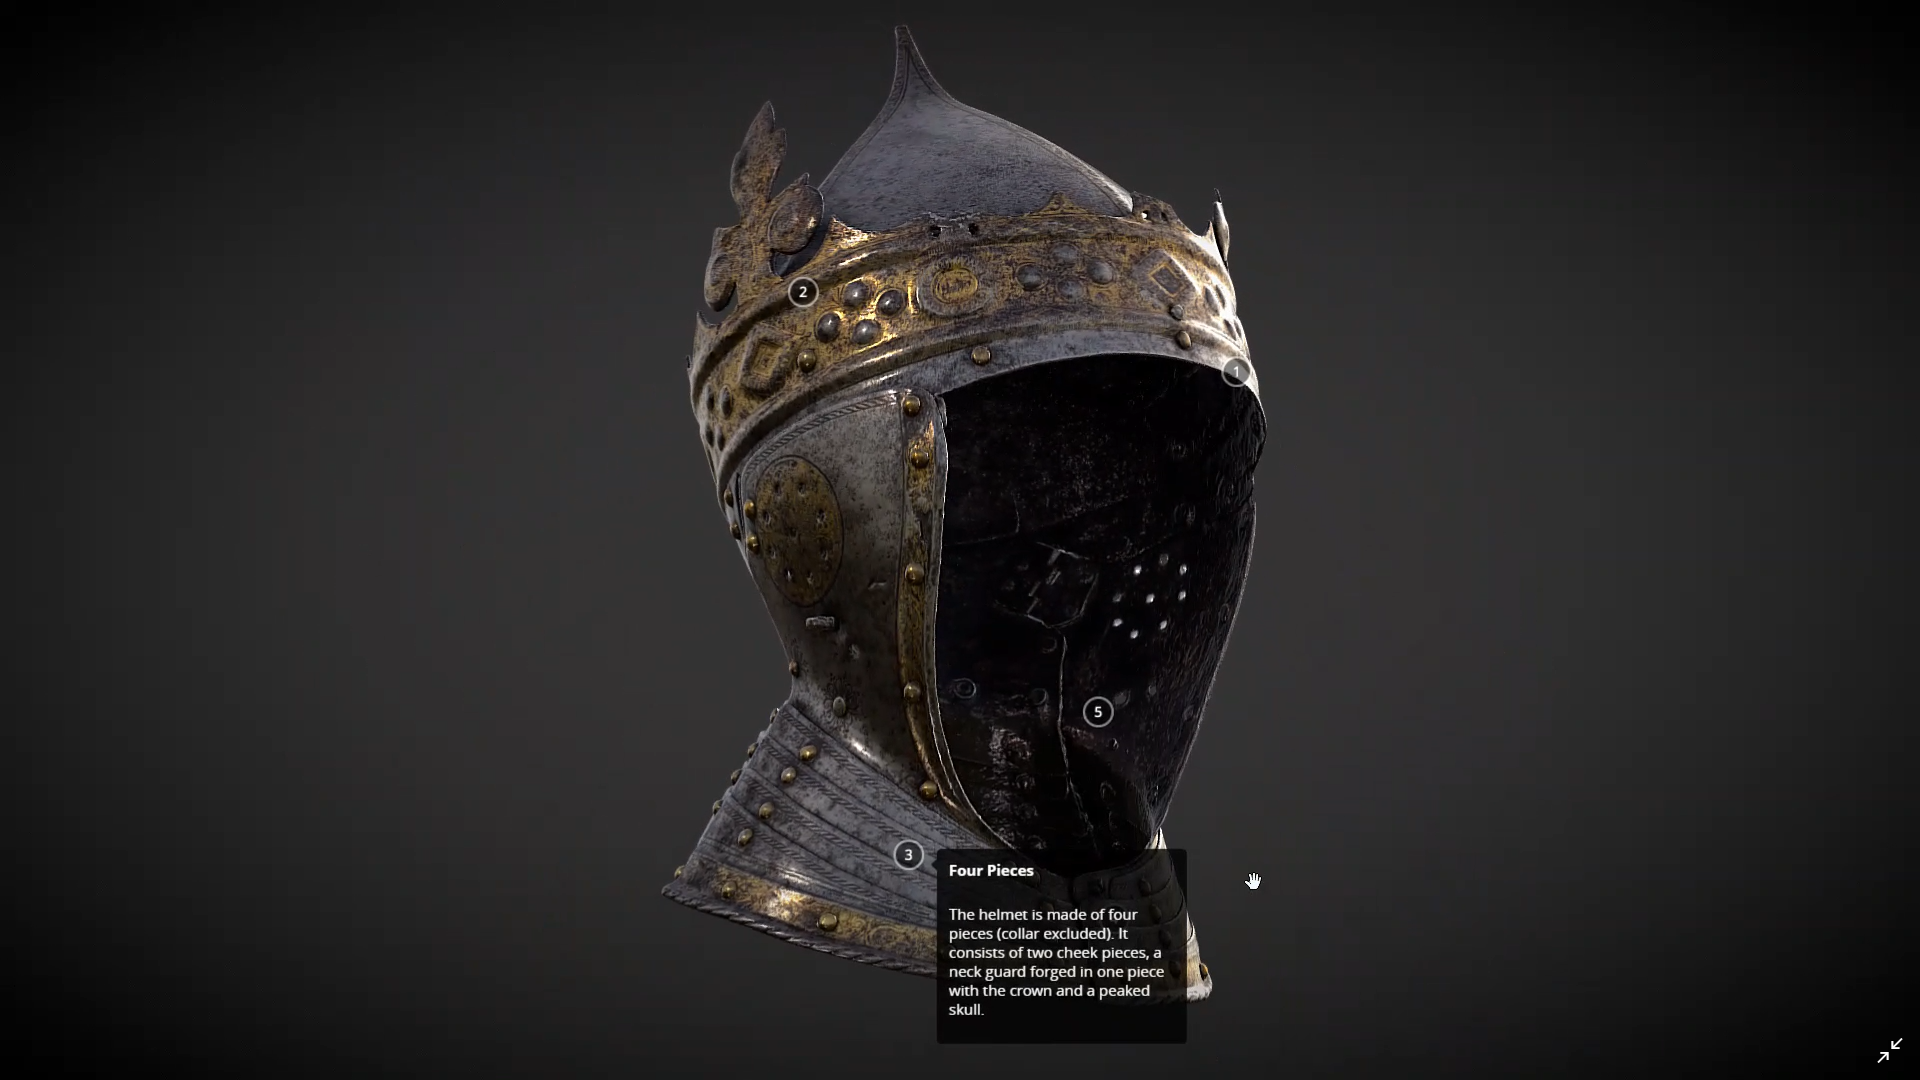 King Gustav Vasa Helmet as screen capture image